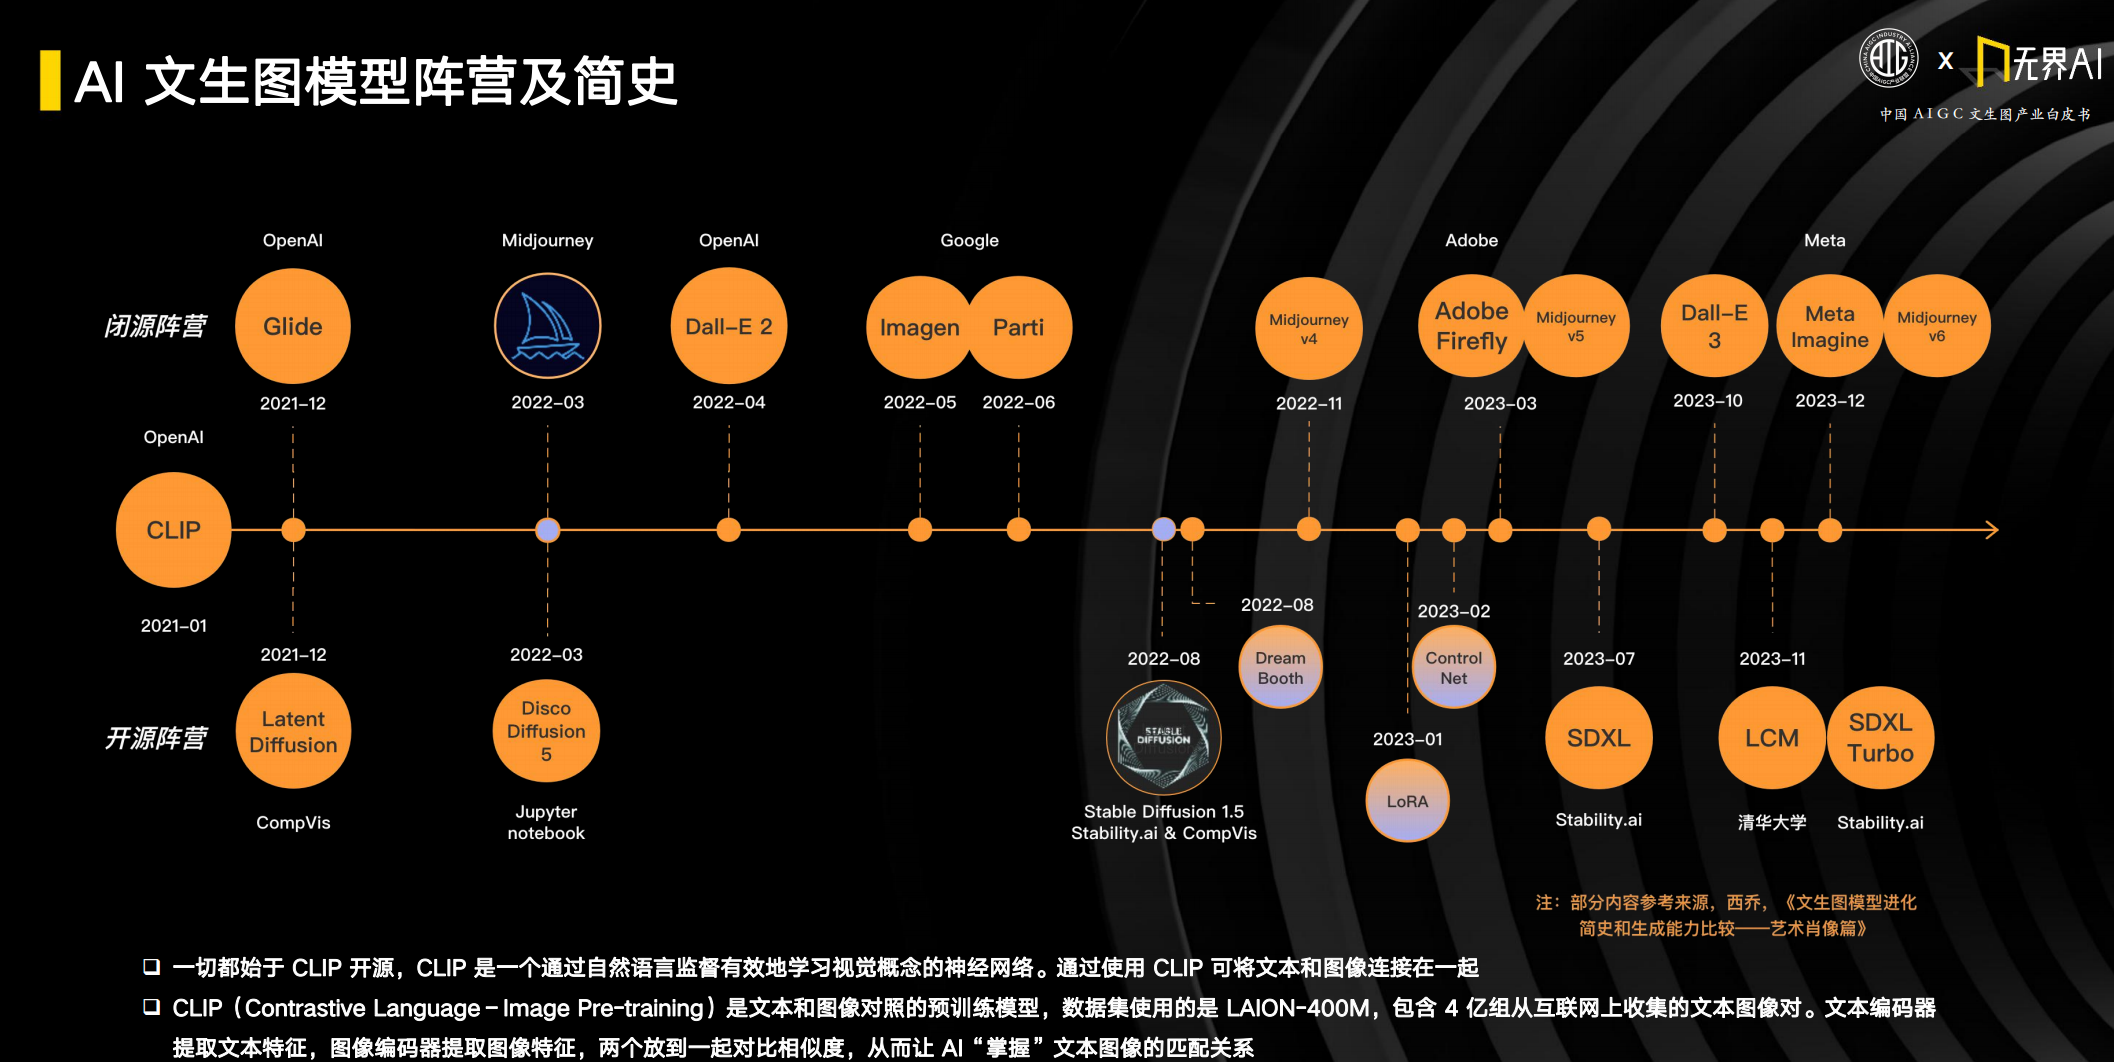 AI 文生图模型阵营及简史，来源：《中国 AIGC 文生图产业白皮书 2023》